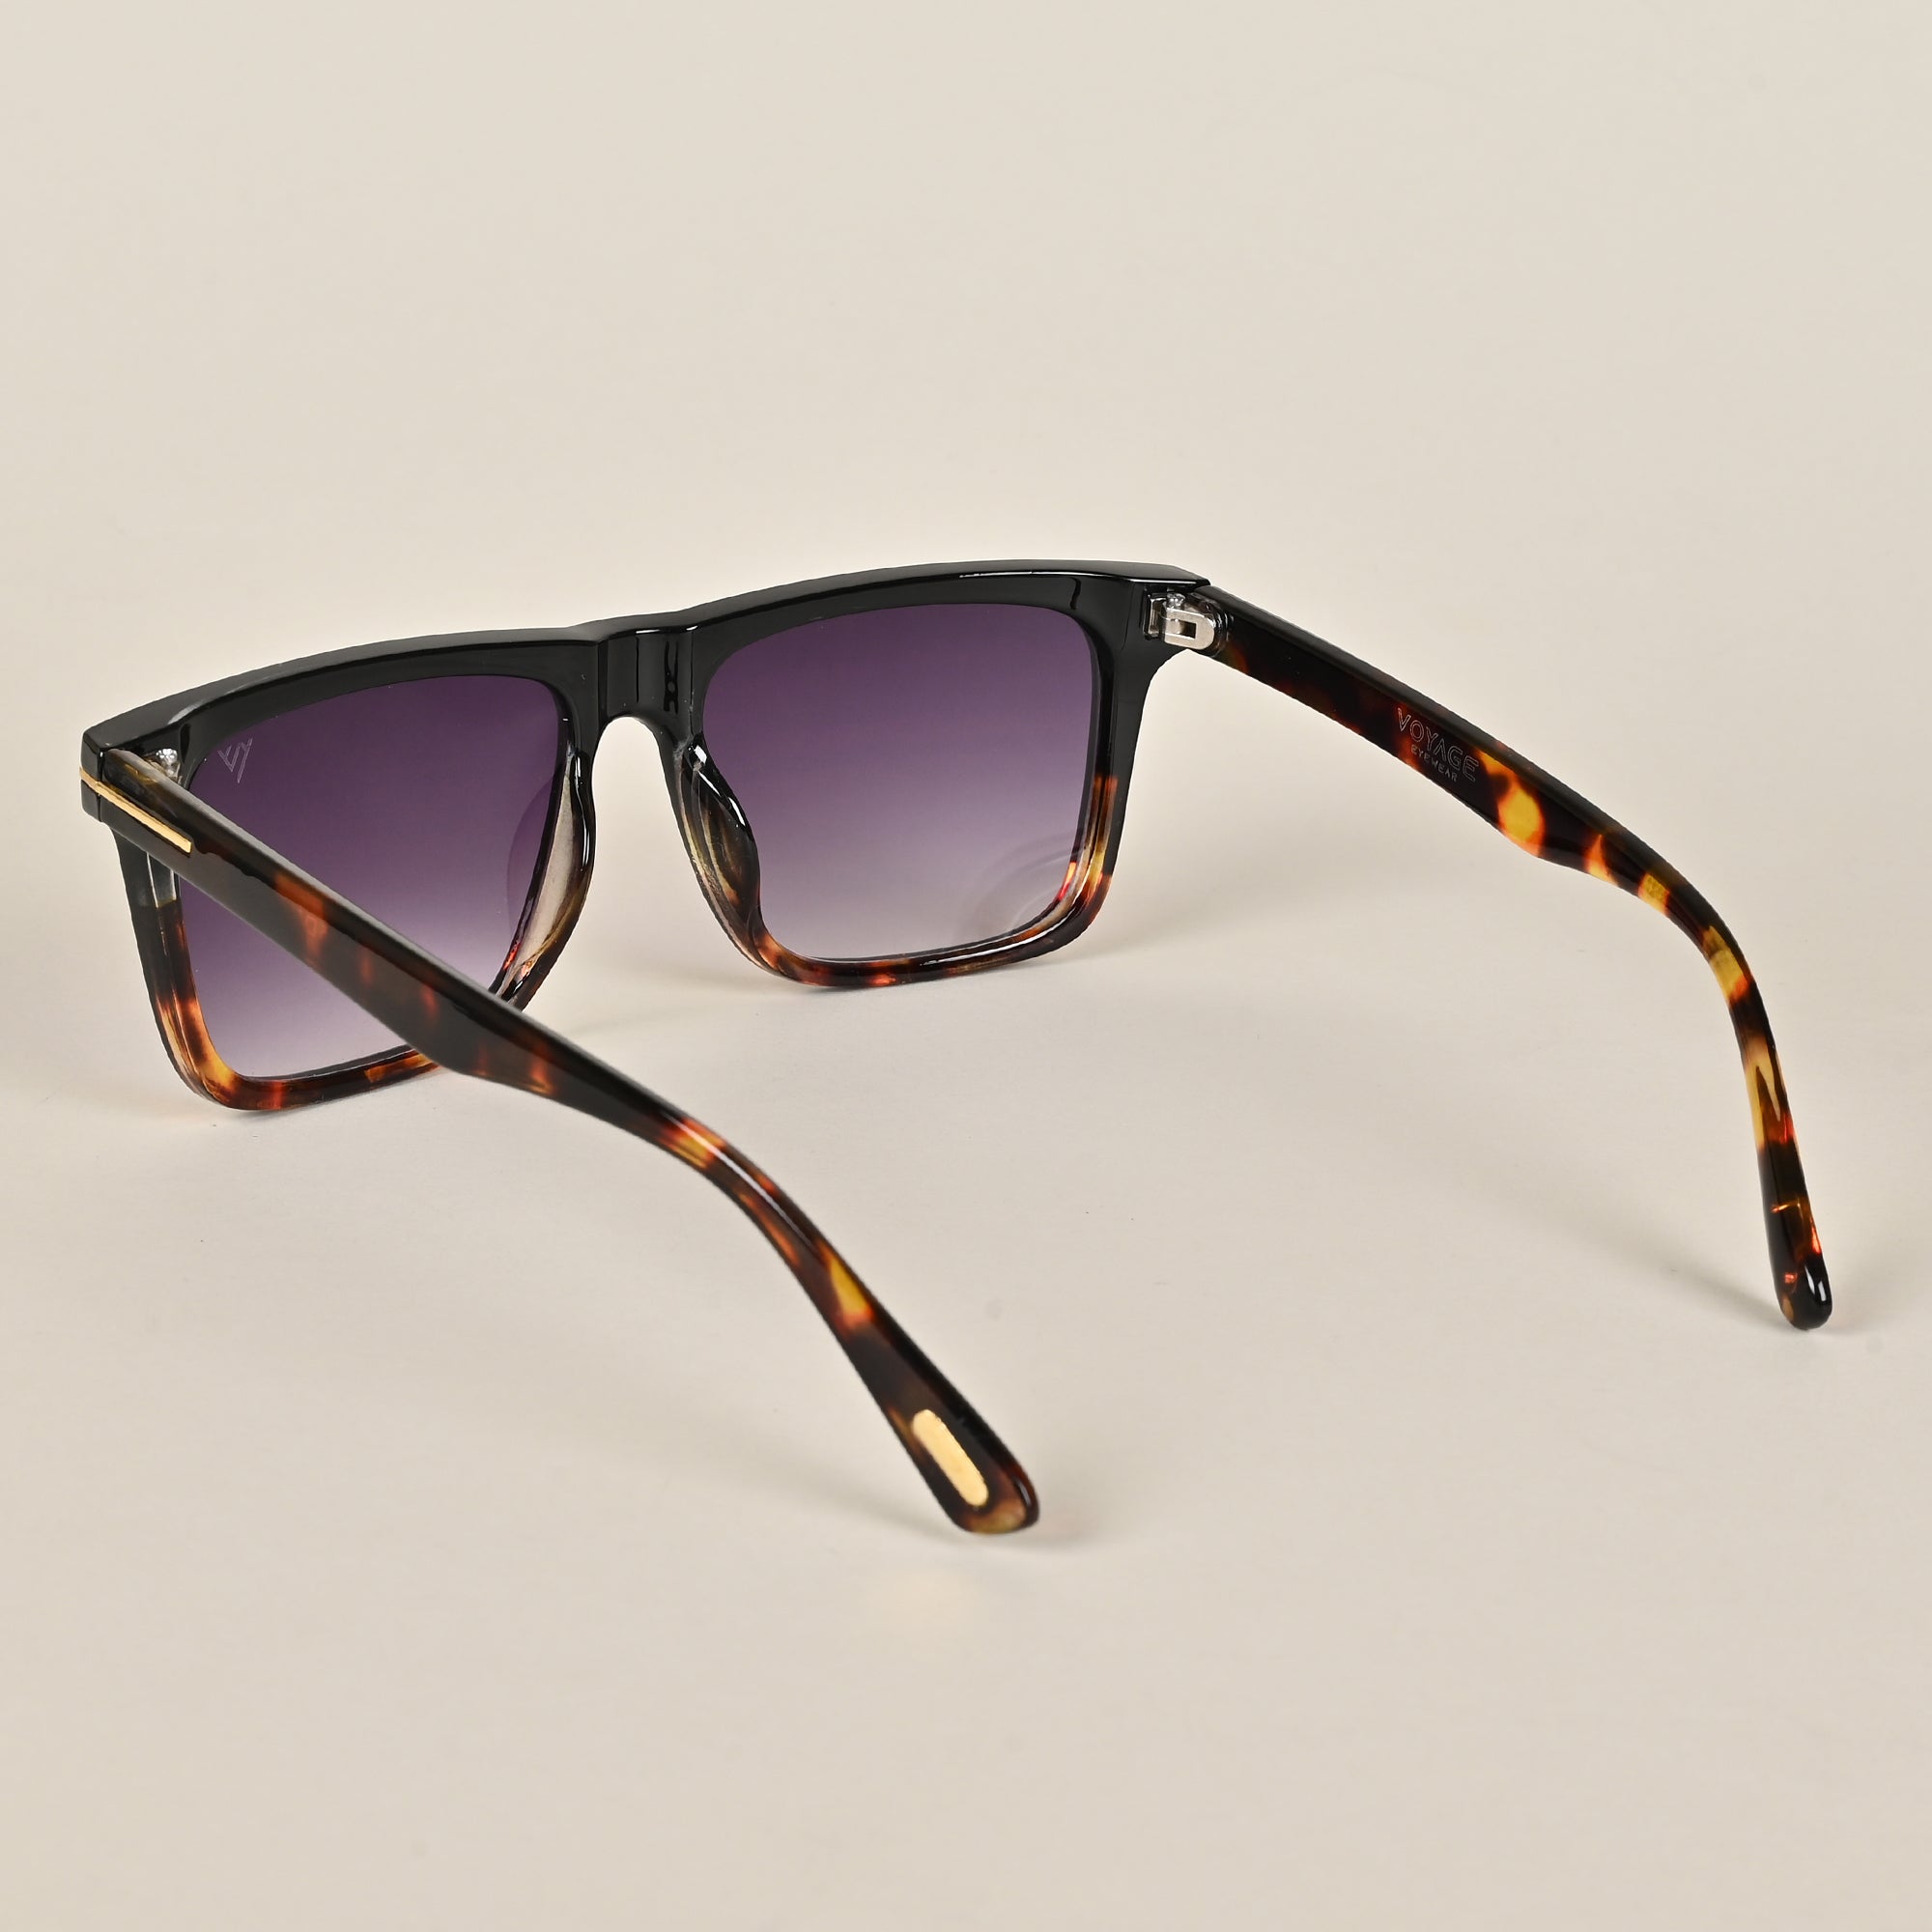 Voyage Black Wayfarer Sunglasses for Men & Women - MG3954